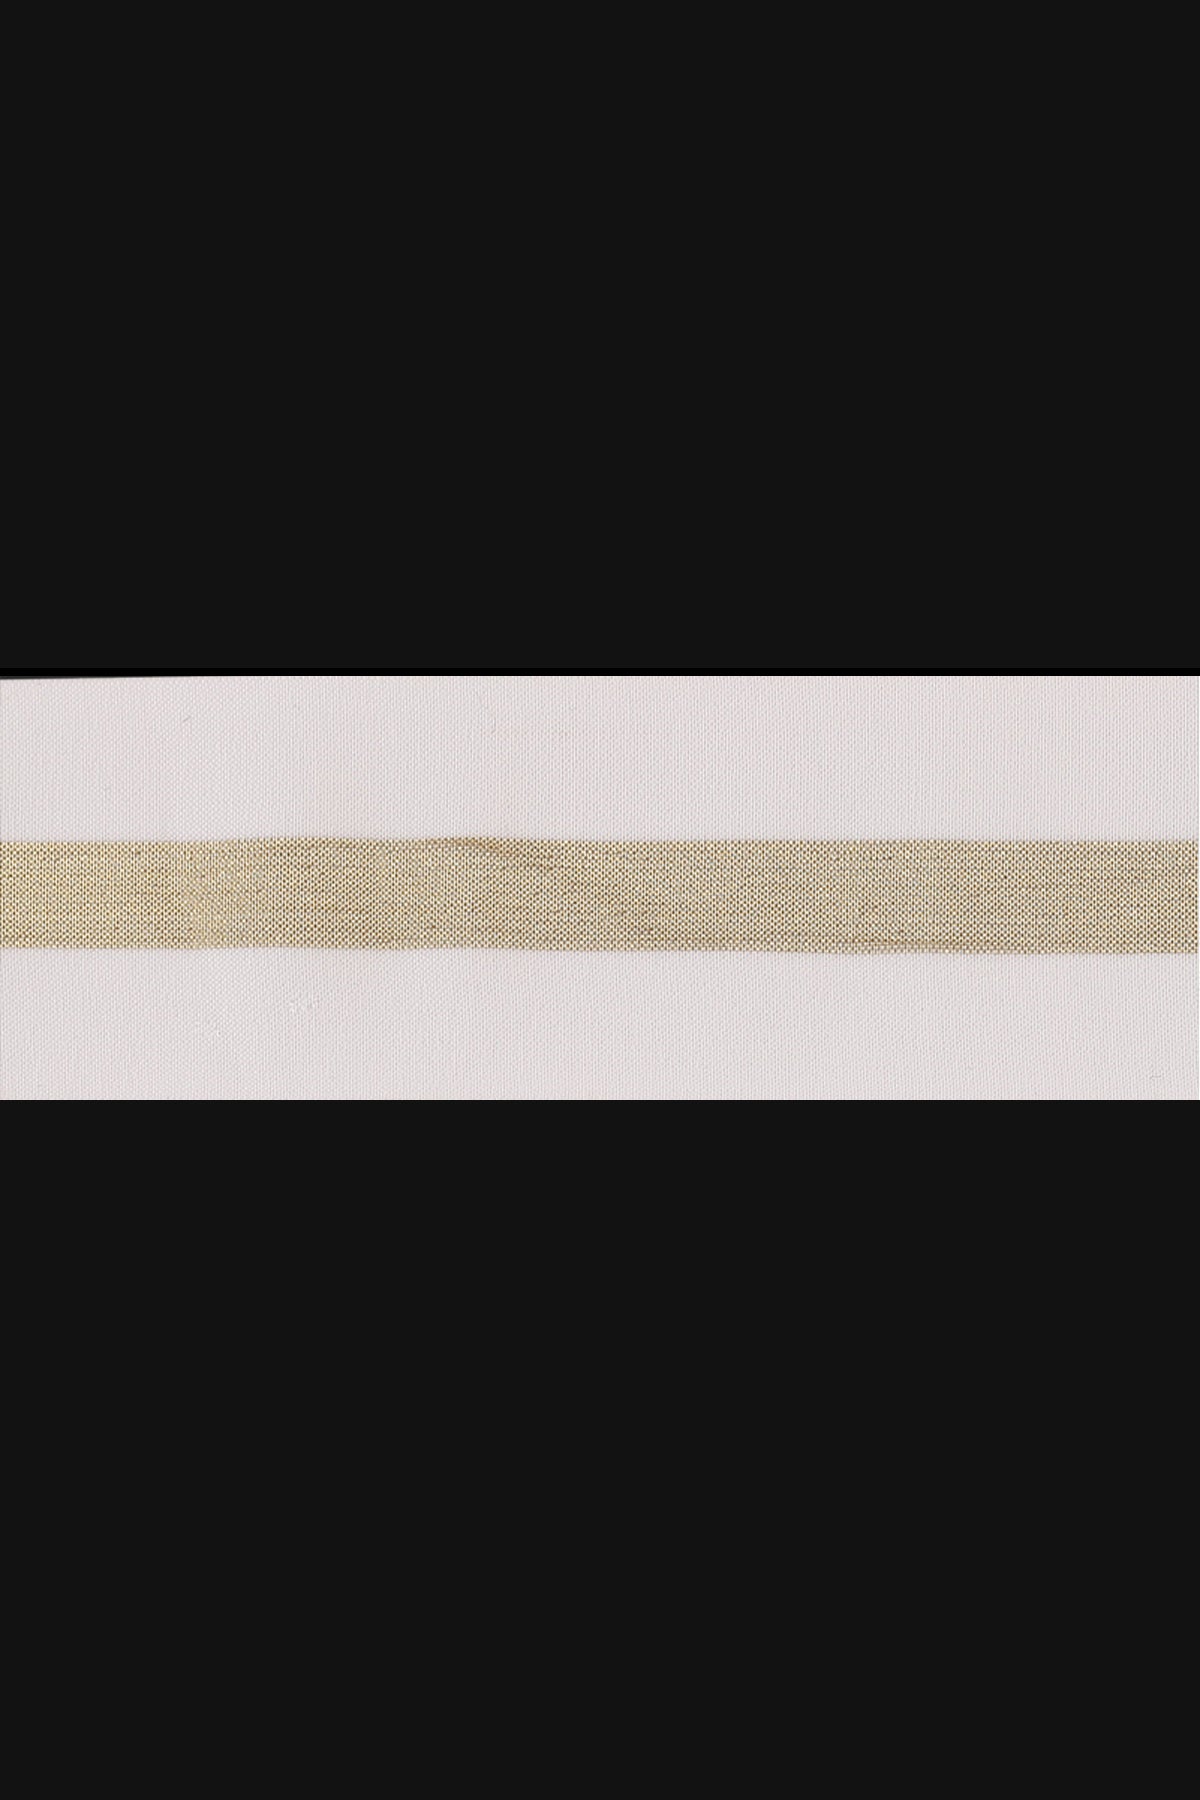 1.5 inch (40mm) Wide Gold Glitter Striped Soft White Elastic Band, Sof